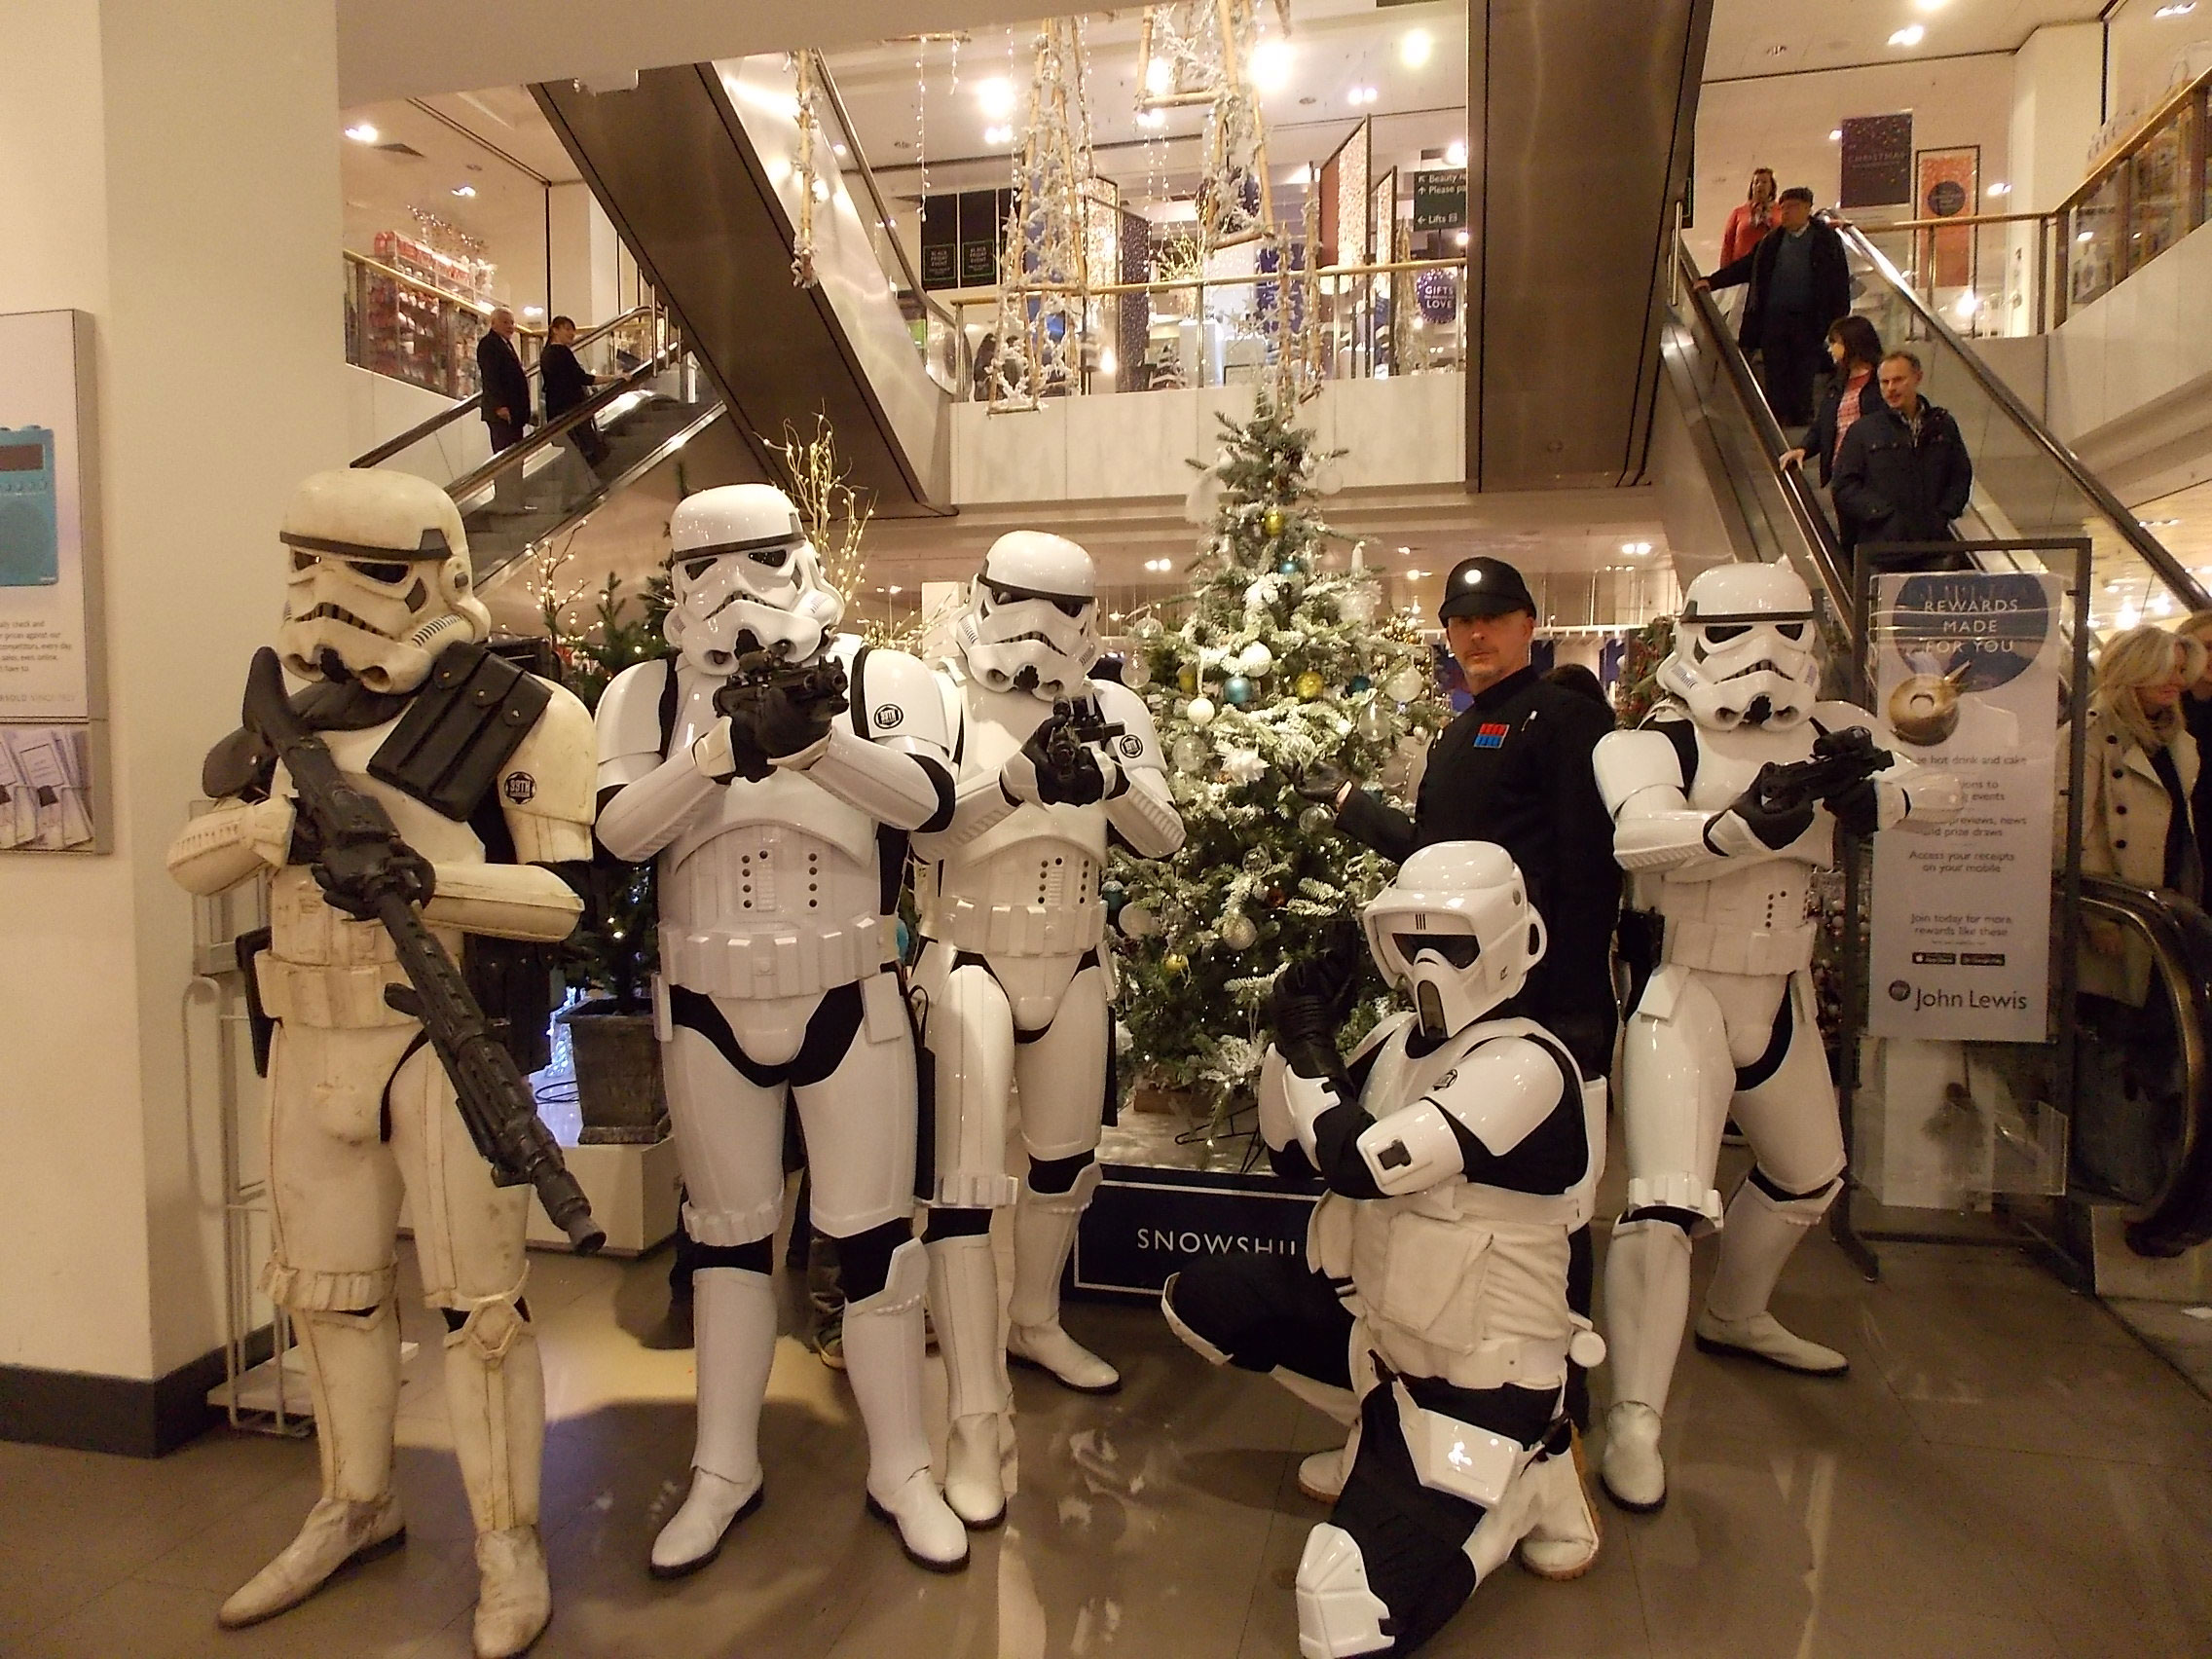 99th Garrison Star Wars Costume Group